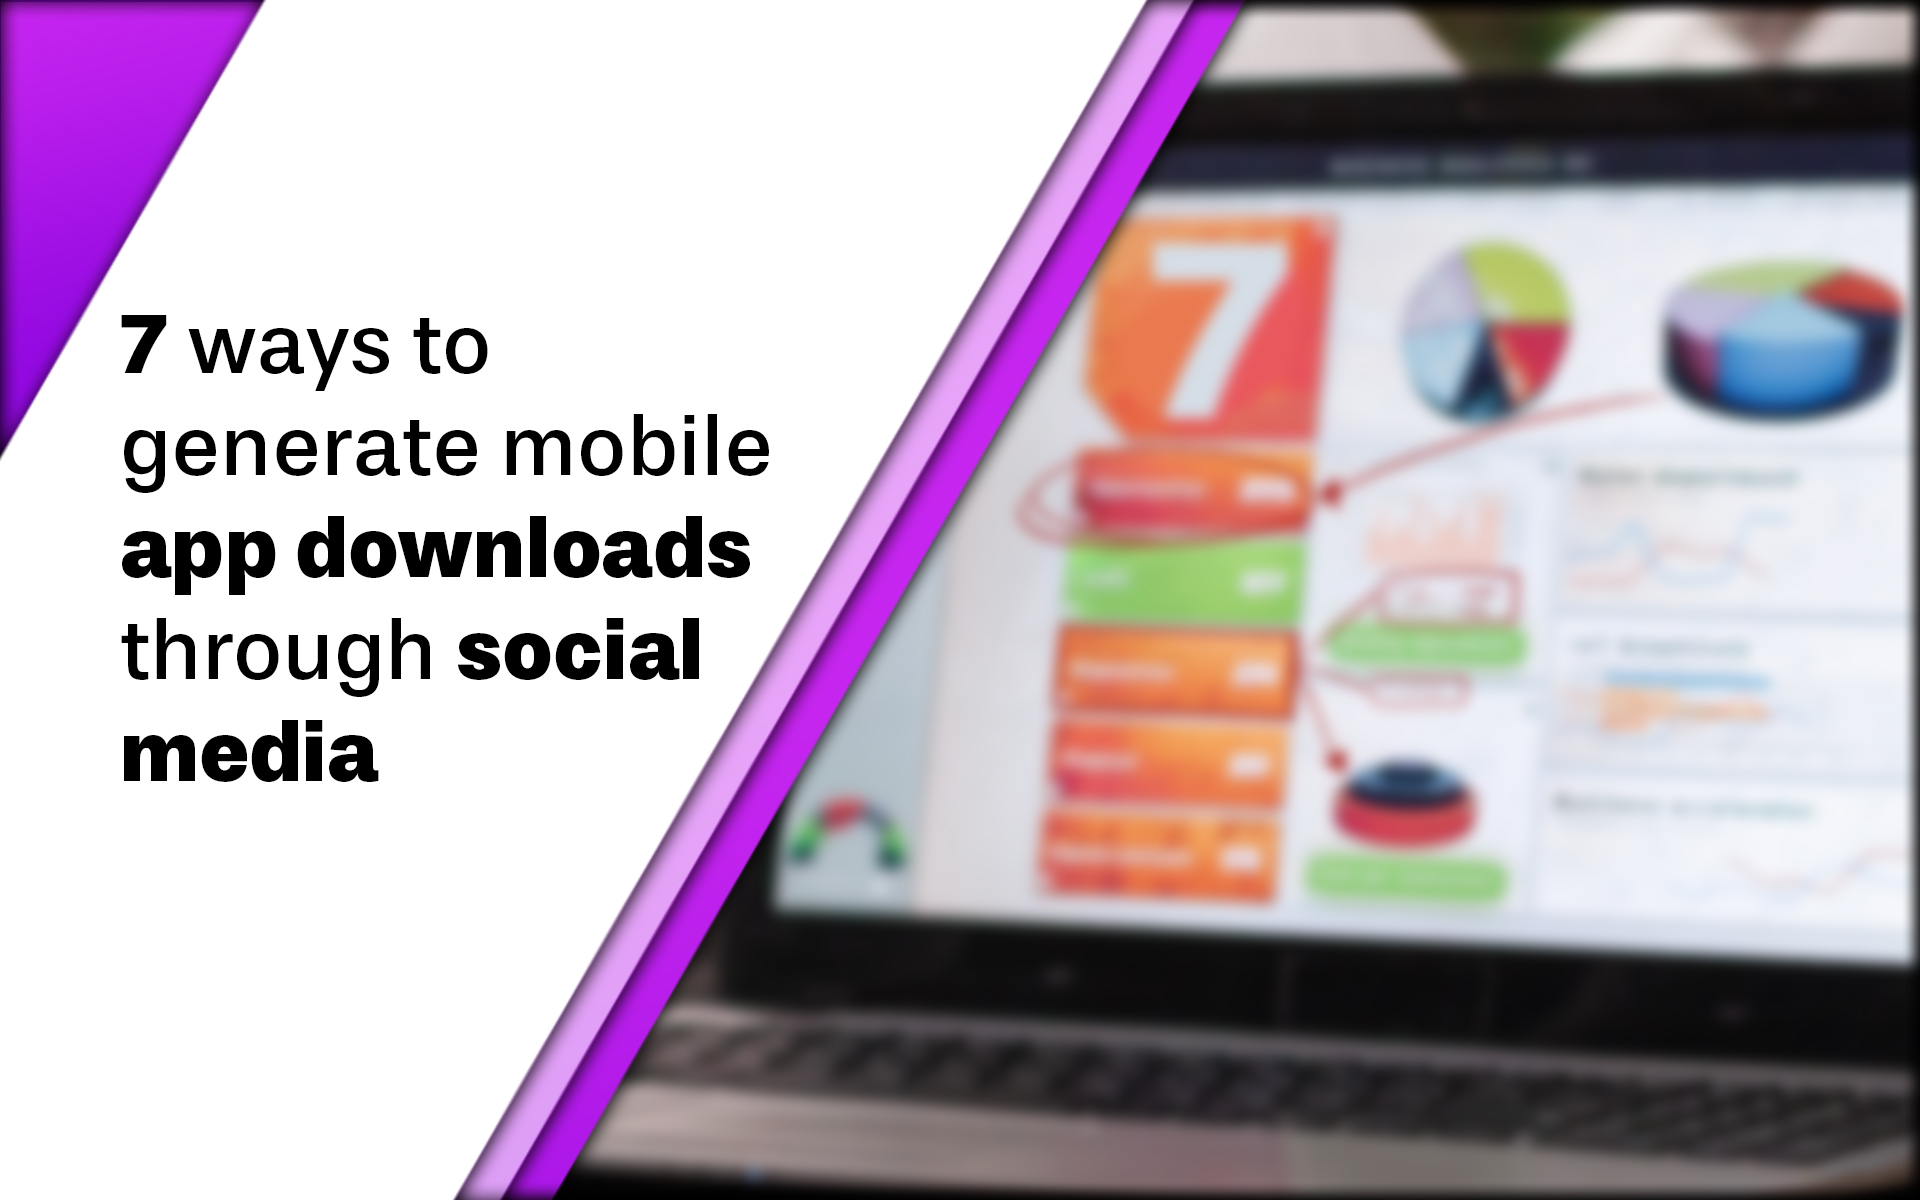 7 ways to generate mobile app downloads through social media